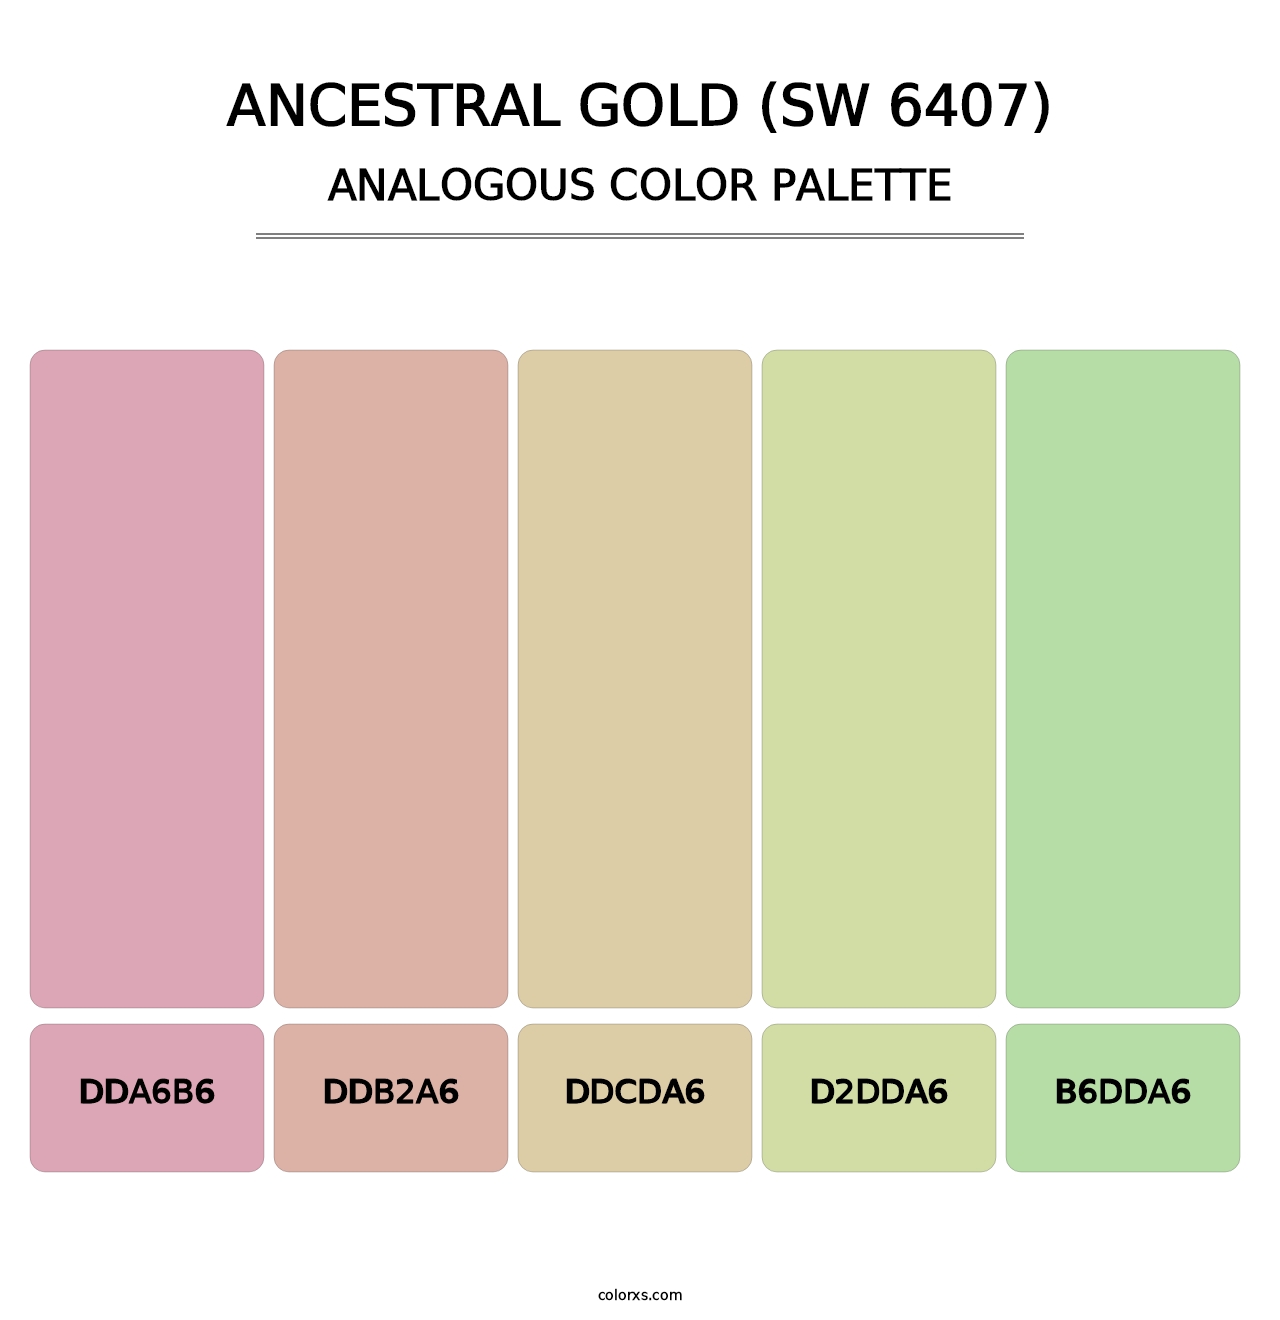 Ancestral Gold (SW 6407) - Analogous Color Palette